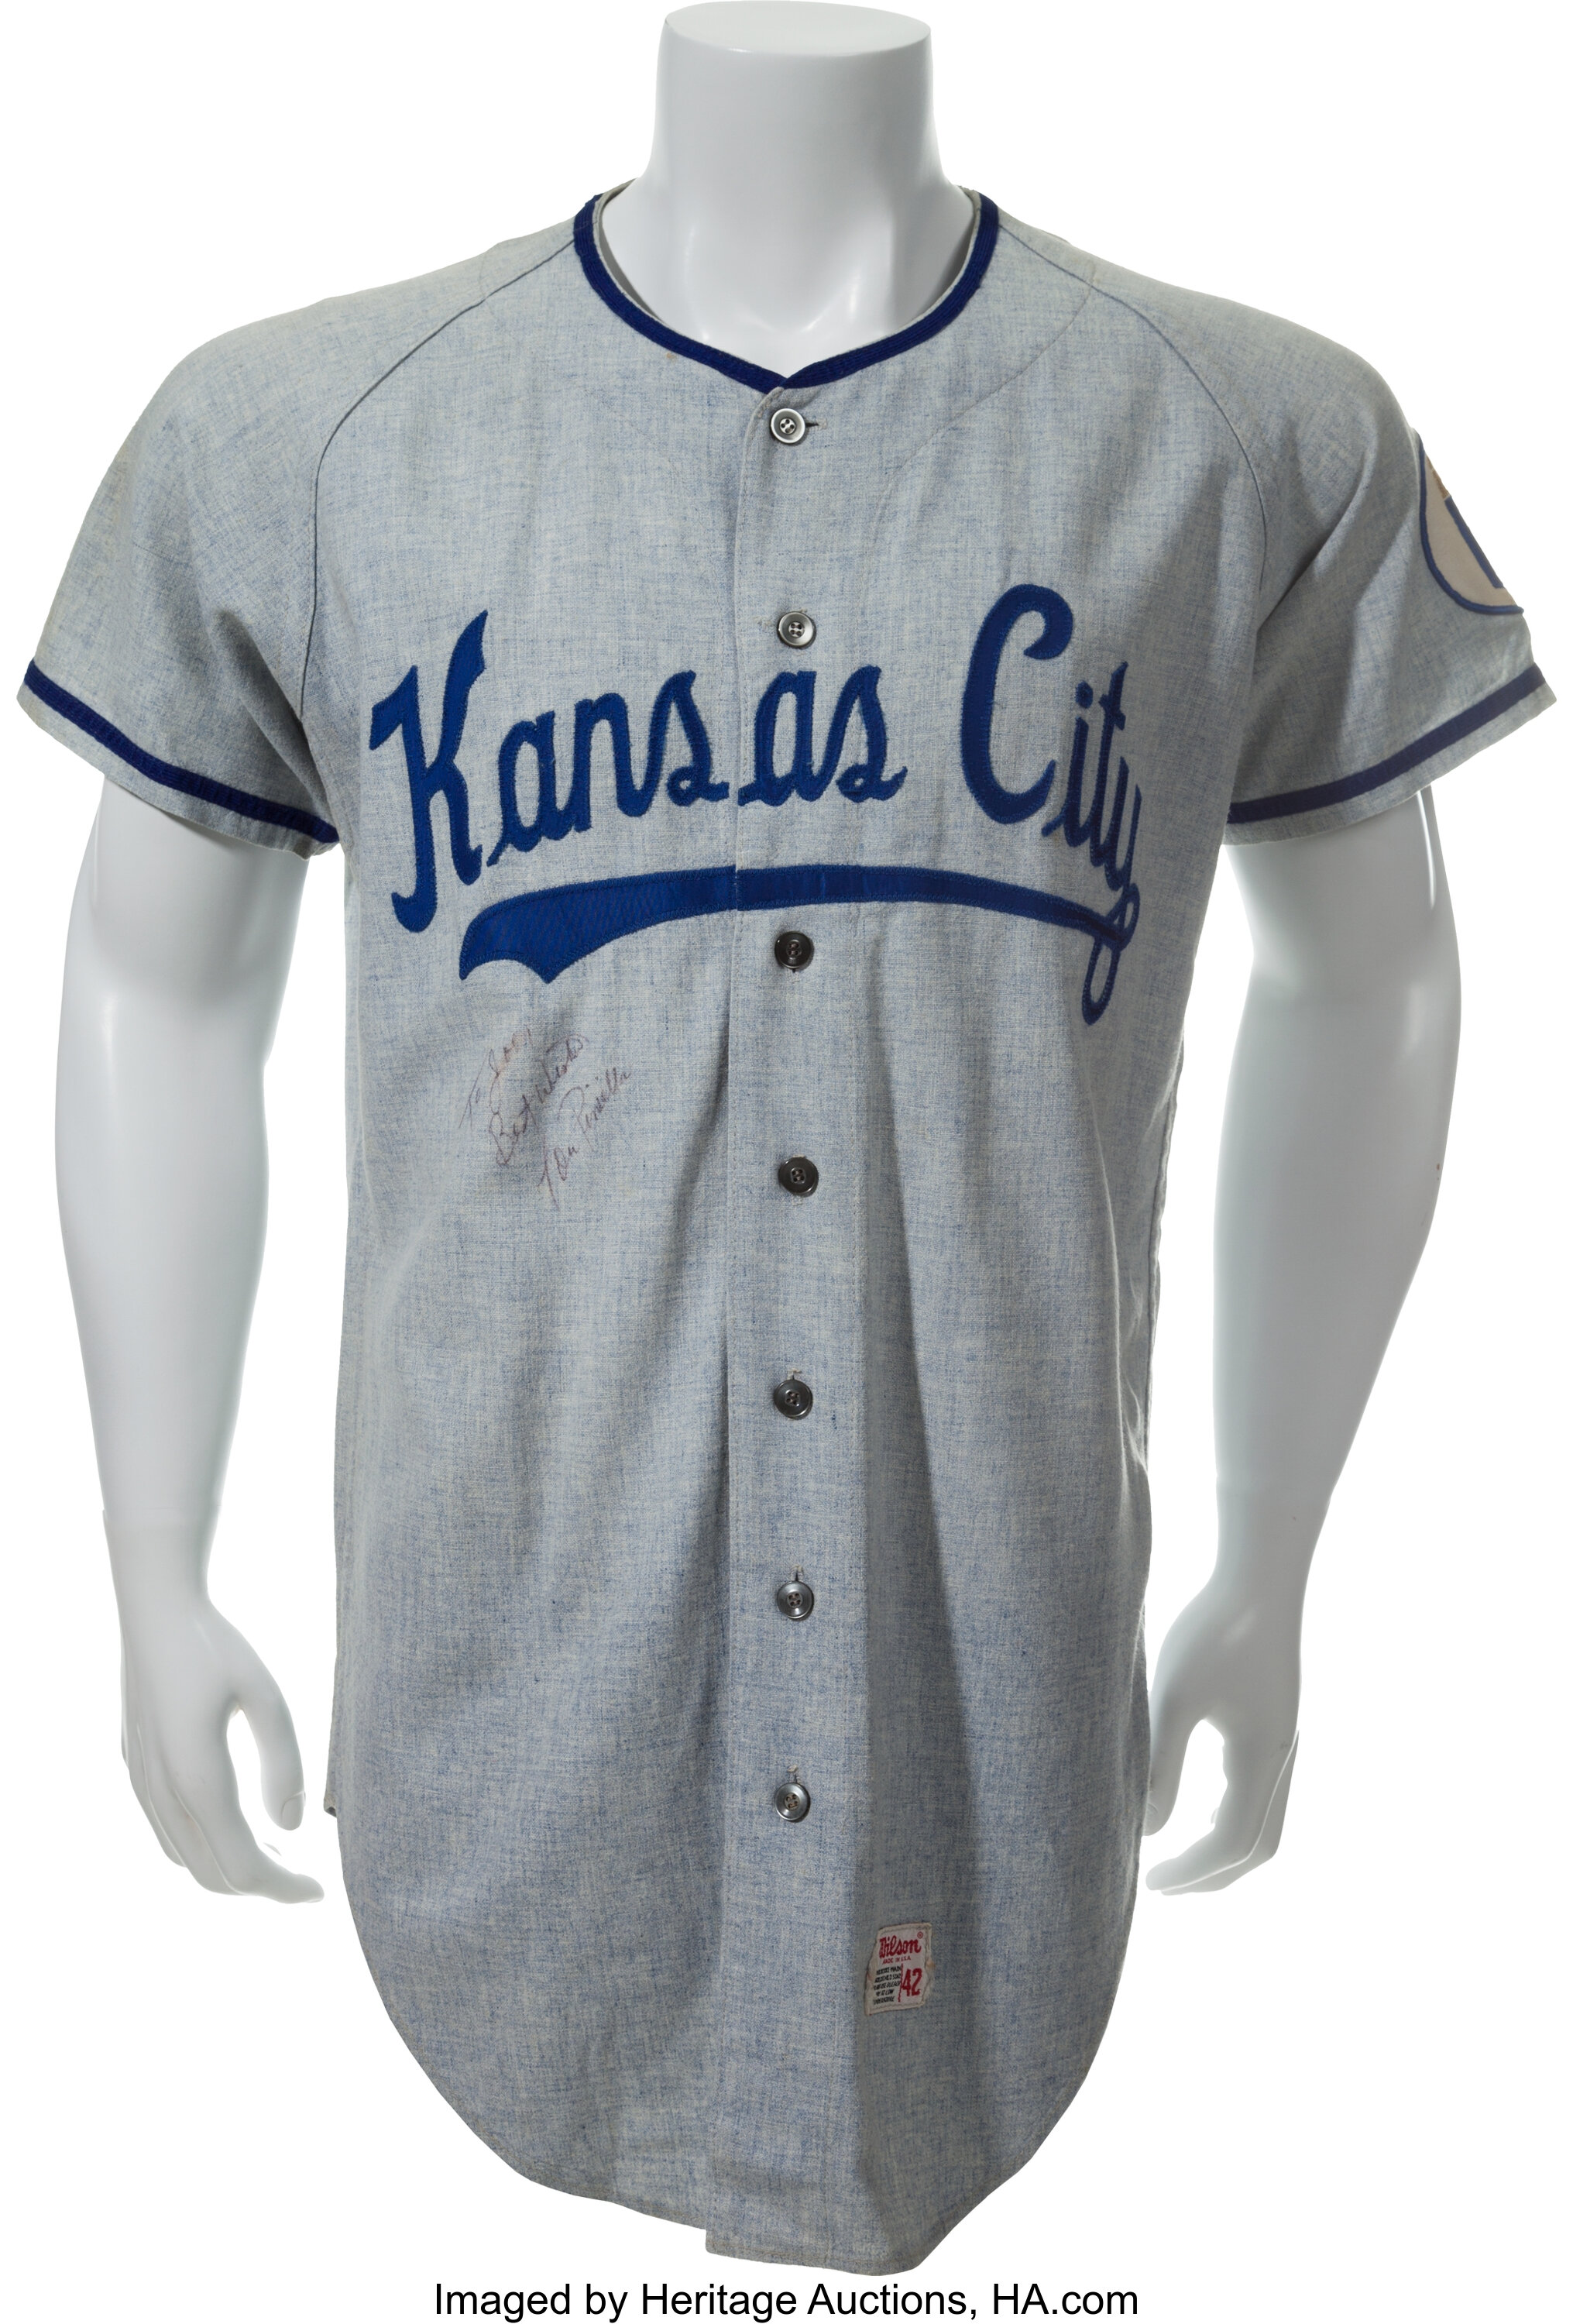 Circa 1970 Kansas City Royals Game Worn Jersey.  Baseball